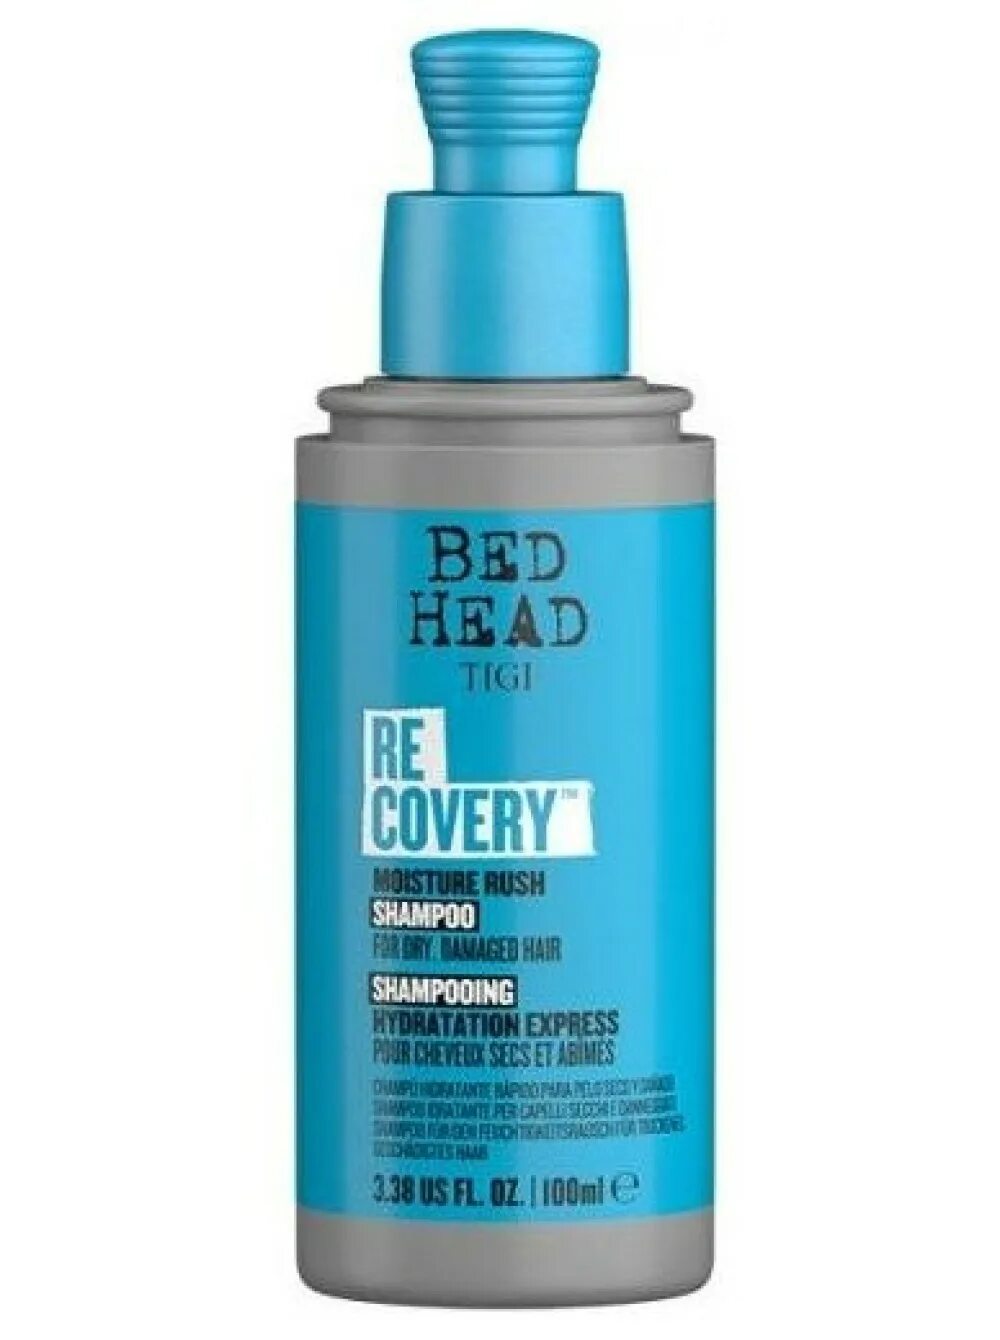 Tigi кондиционер Recovery для сухих и поврежденных волос, 400 мл. Bed head увлажняющий шампунь. Recovery Shampoo Tigi 100ml. Тиджи шампунь увлажняющий. Tigi кондиционер для волос